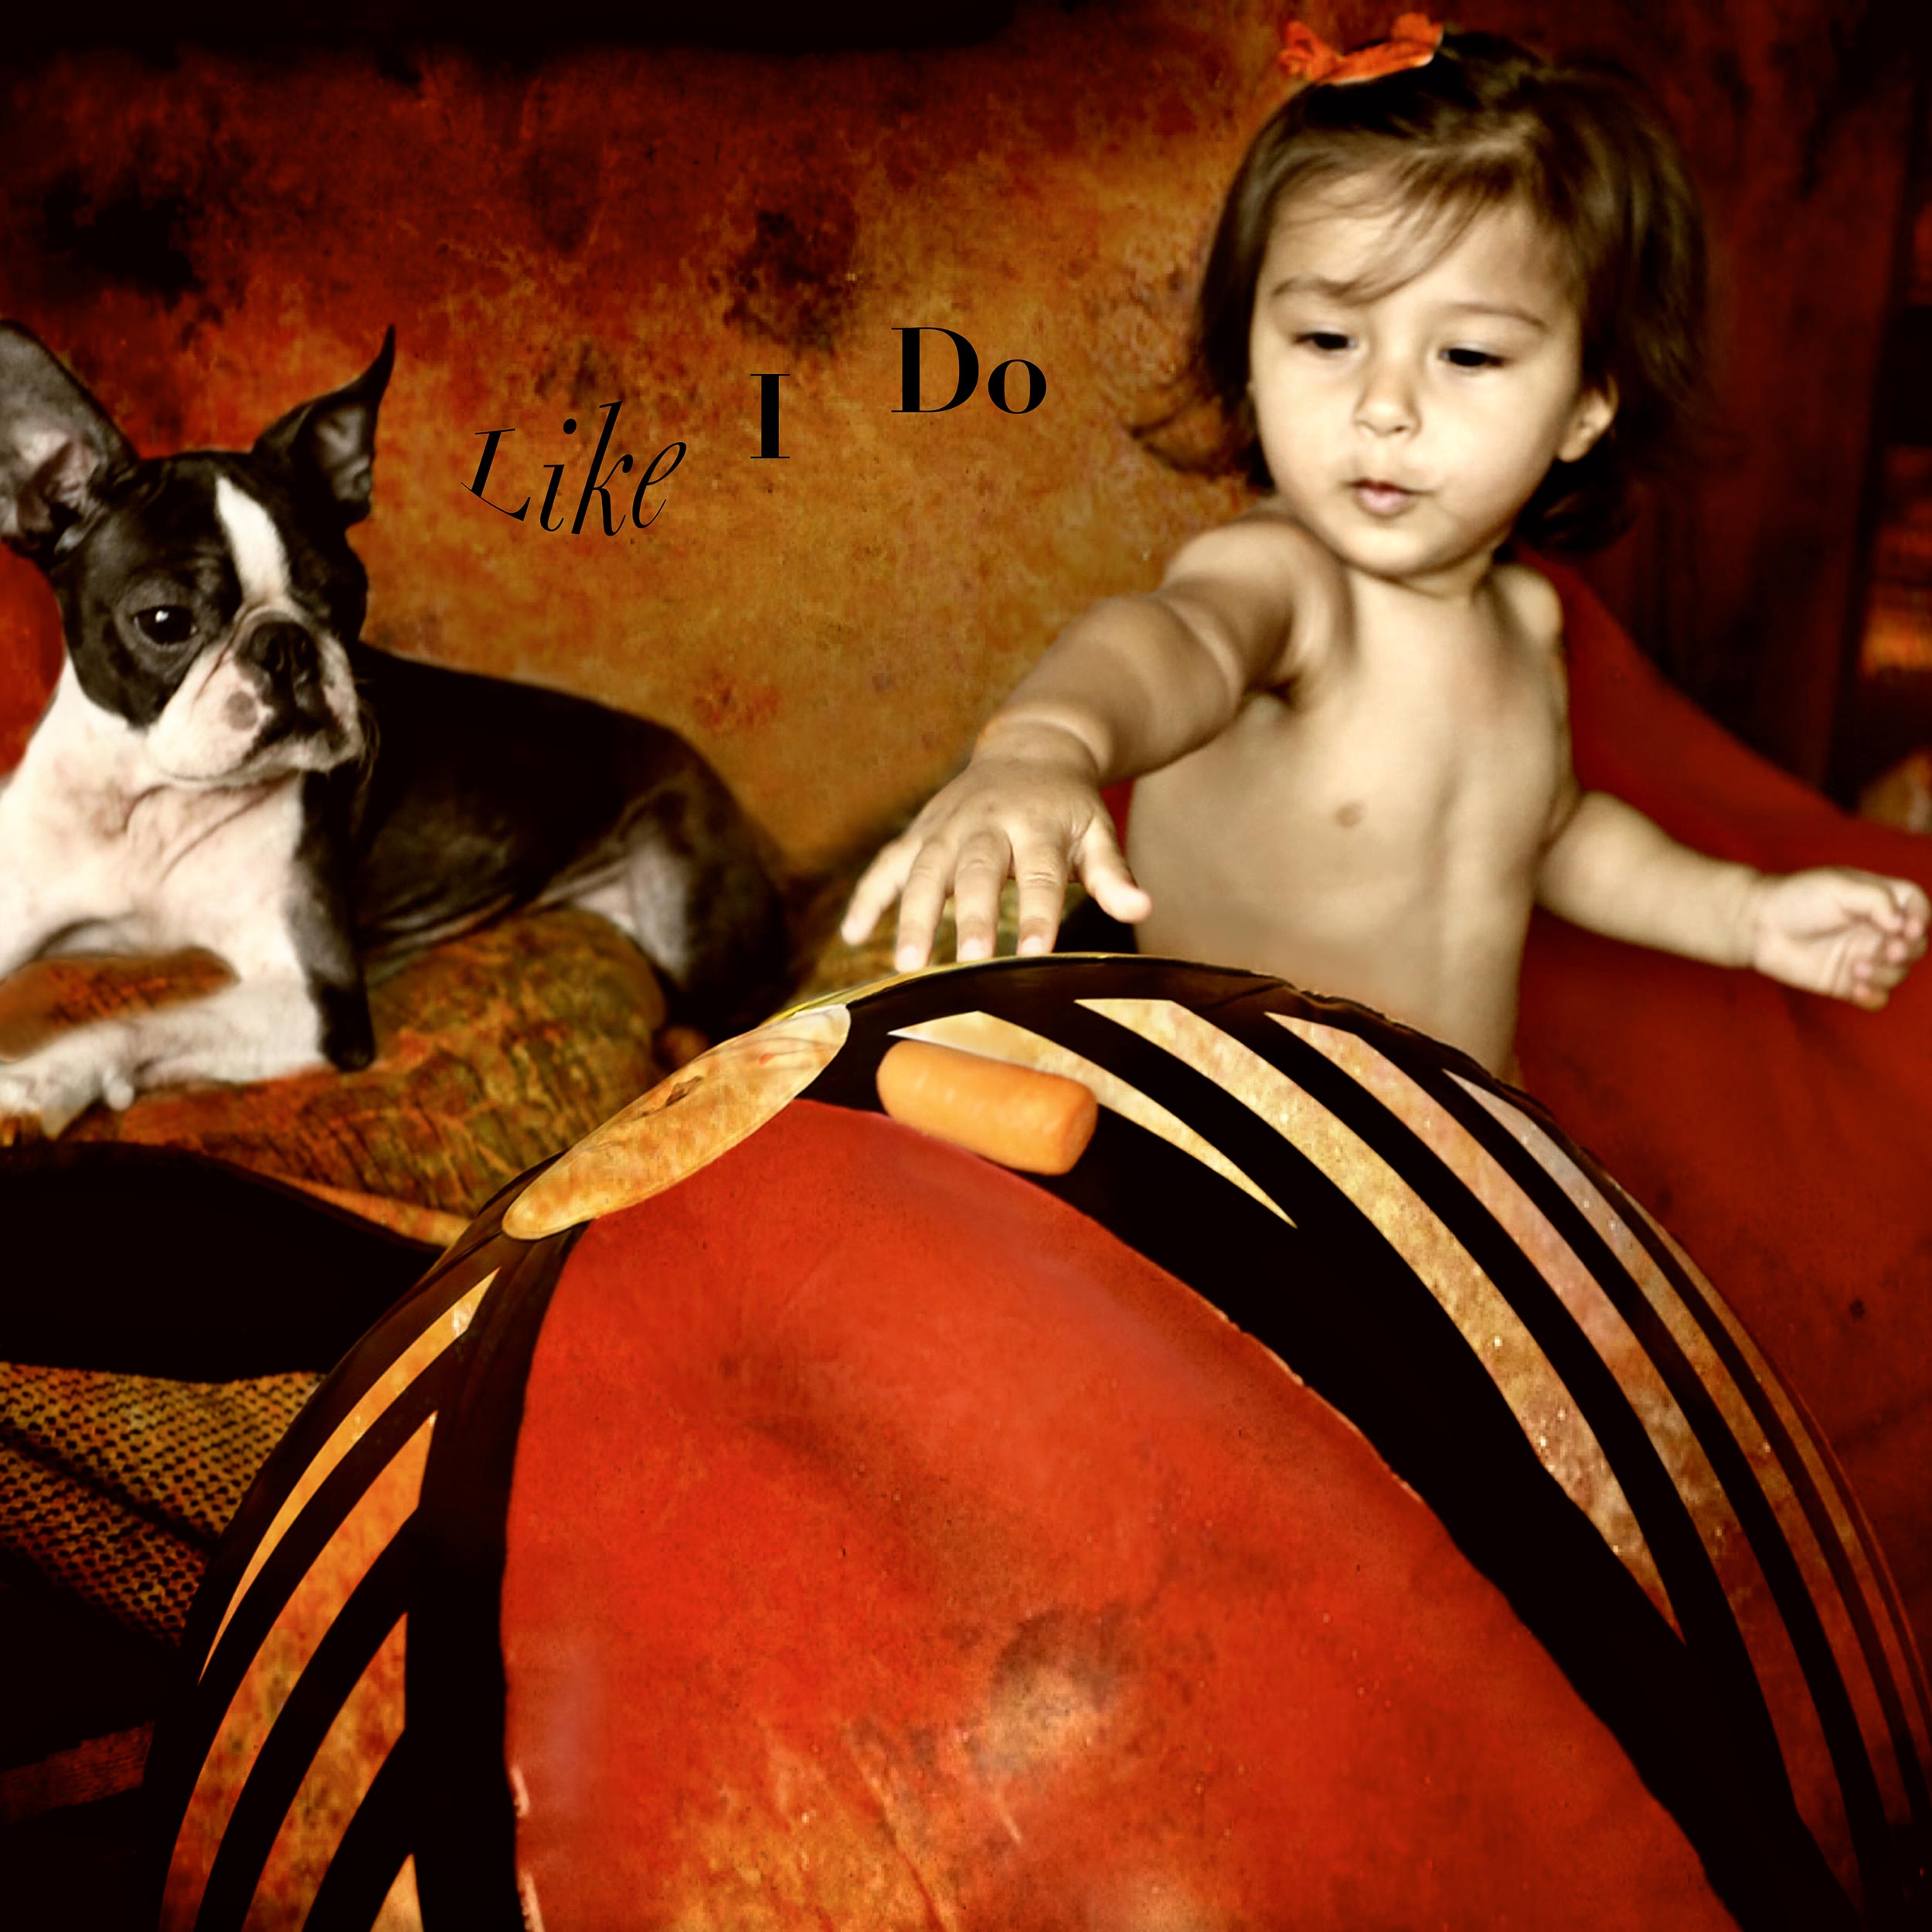 Babies-and-Dogs-Anshwara-and-Jazzy-Like-I-do.jpg